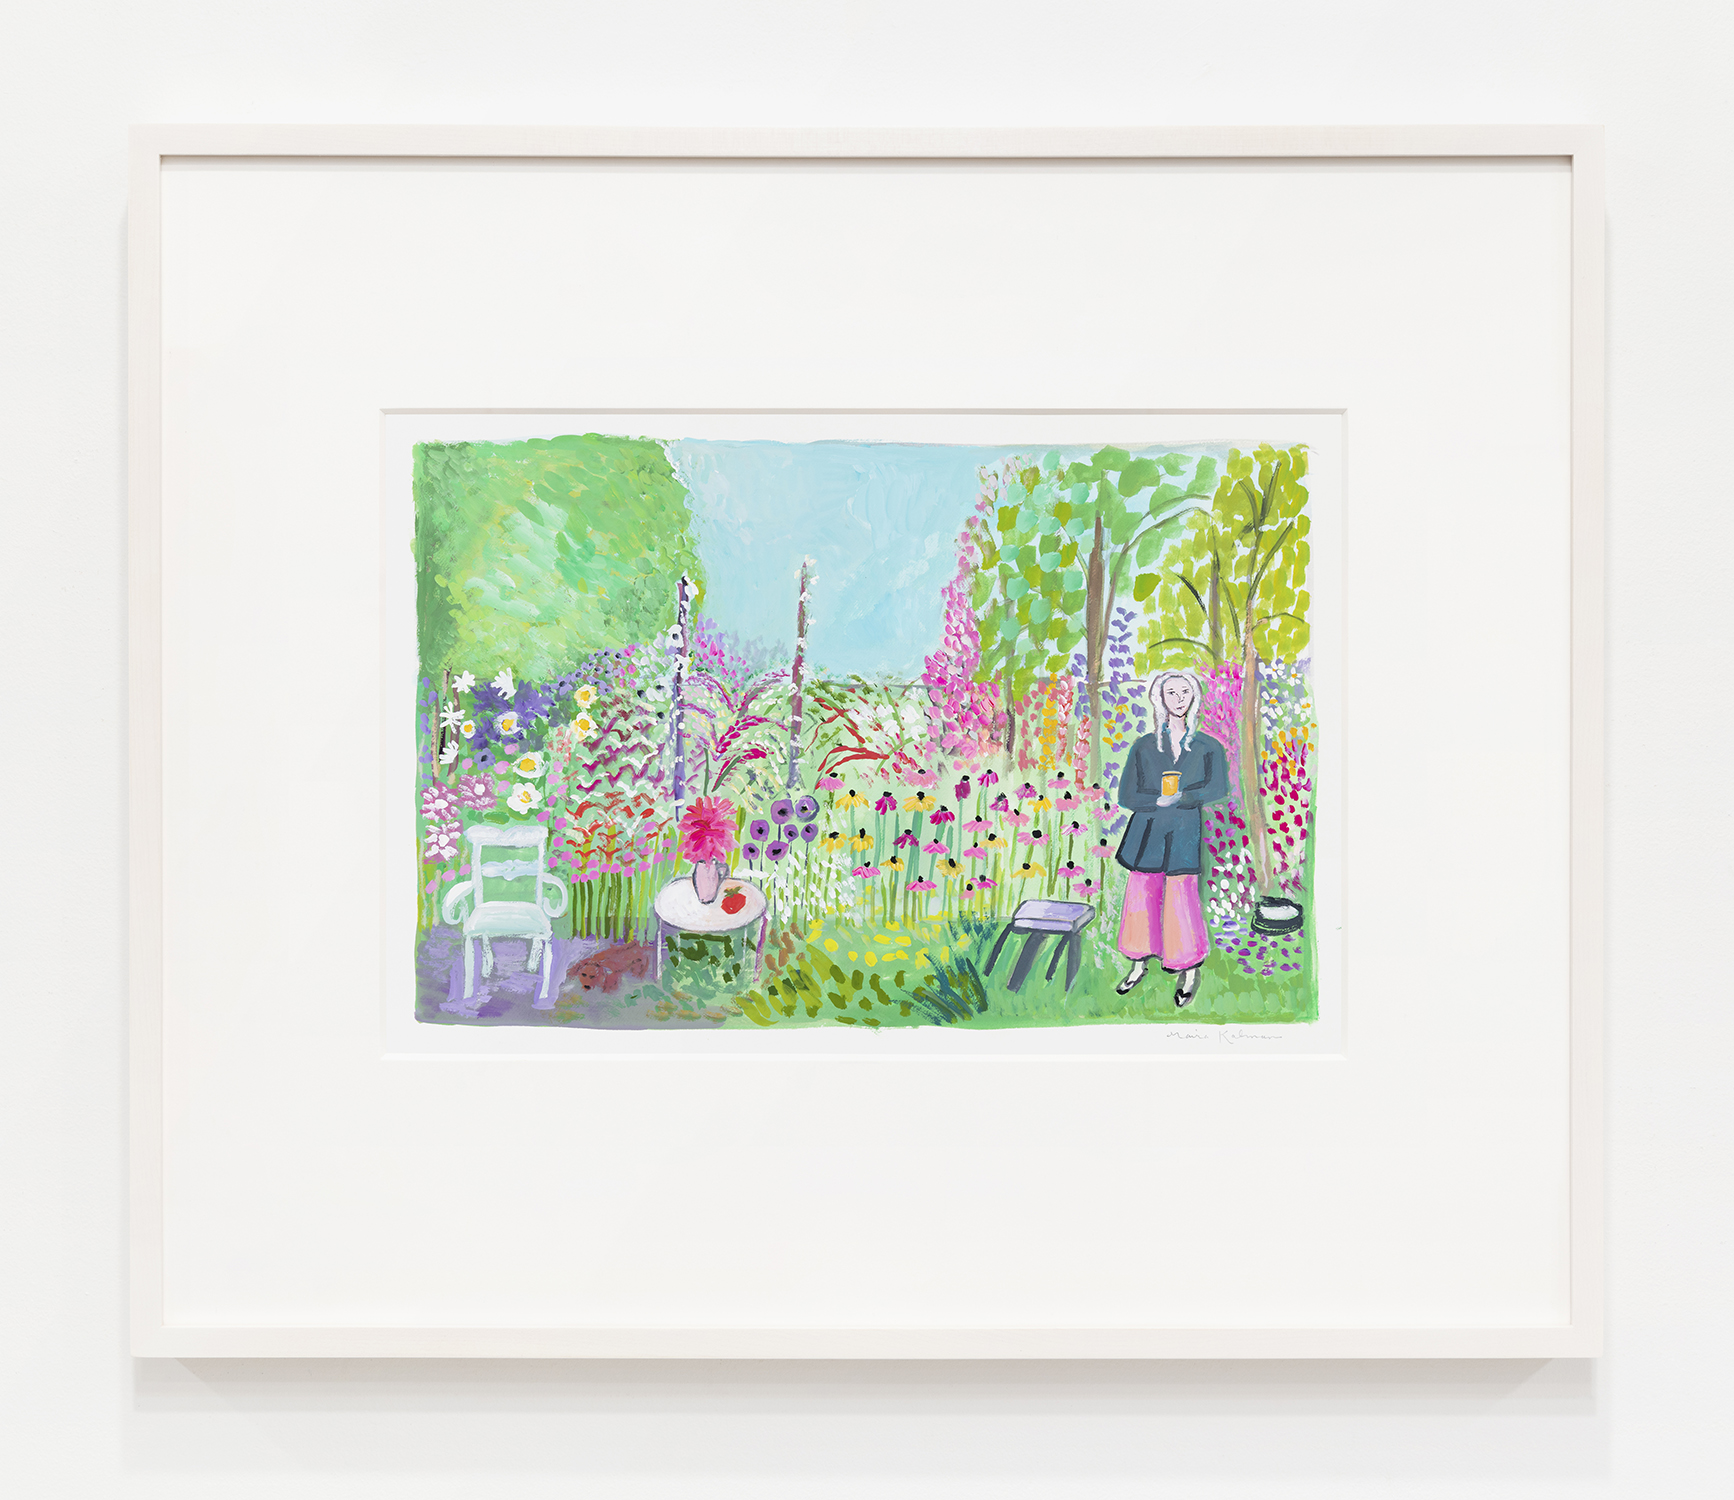 Maira Kalman, Kiki in the Garden, 2022, Gouache, Framed Dimensions: 20 x 24 inches (50.8 x 61 cm)